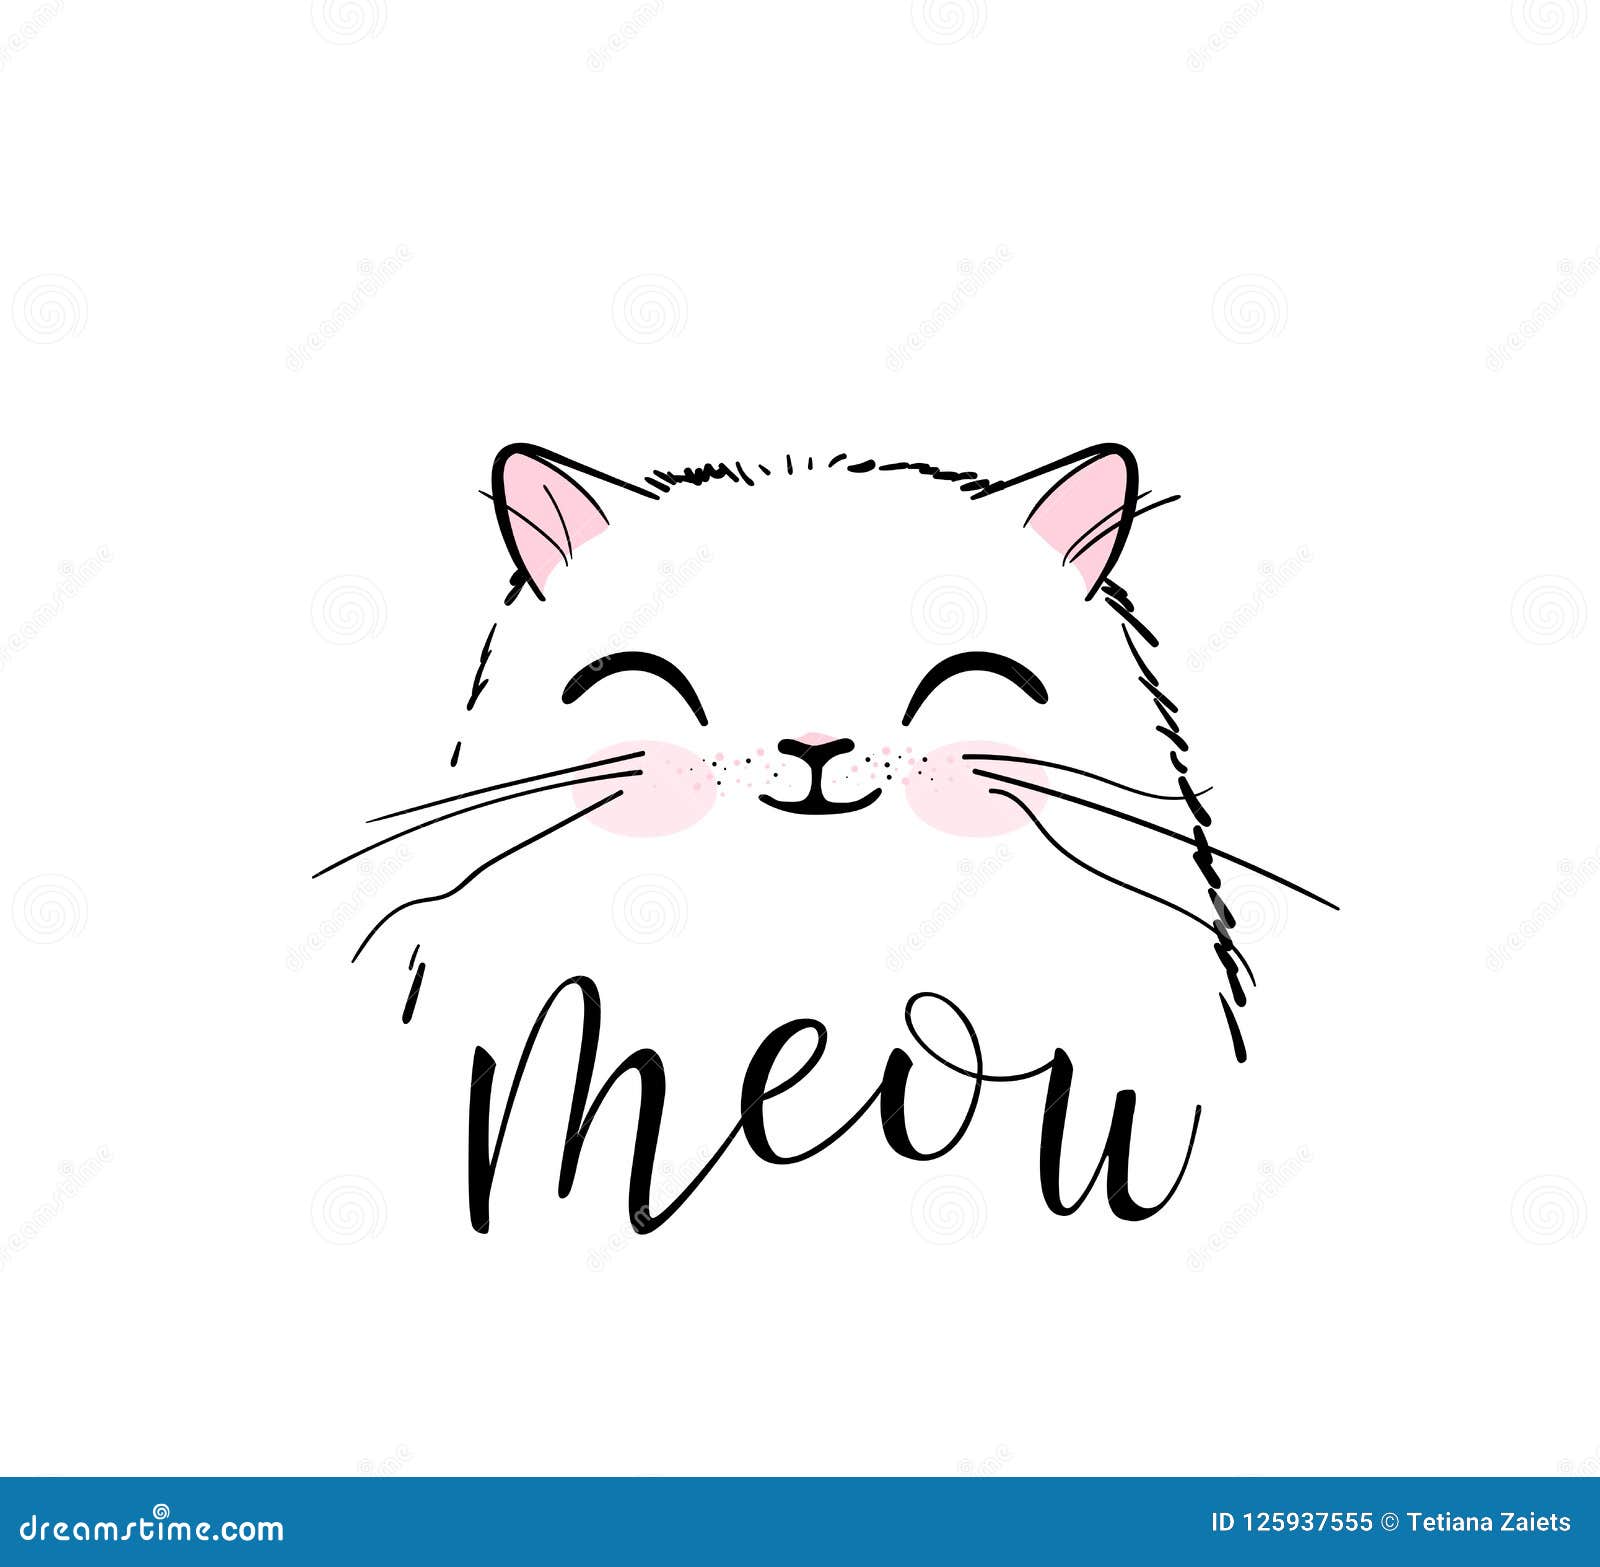 Cute Cat Vector Print Design. Meow Lettering Text. Kitten Face